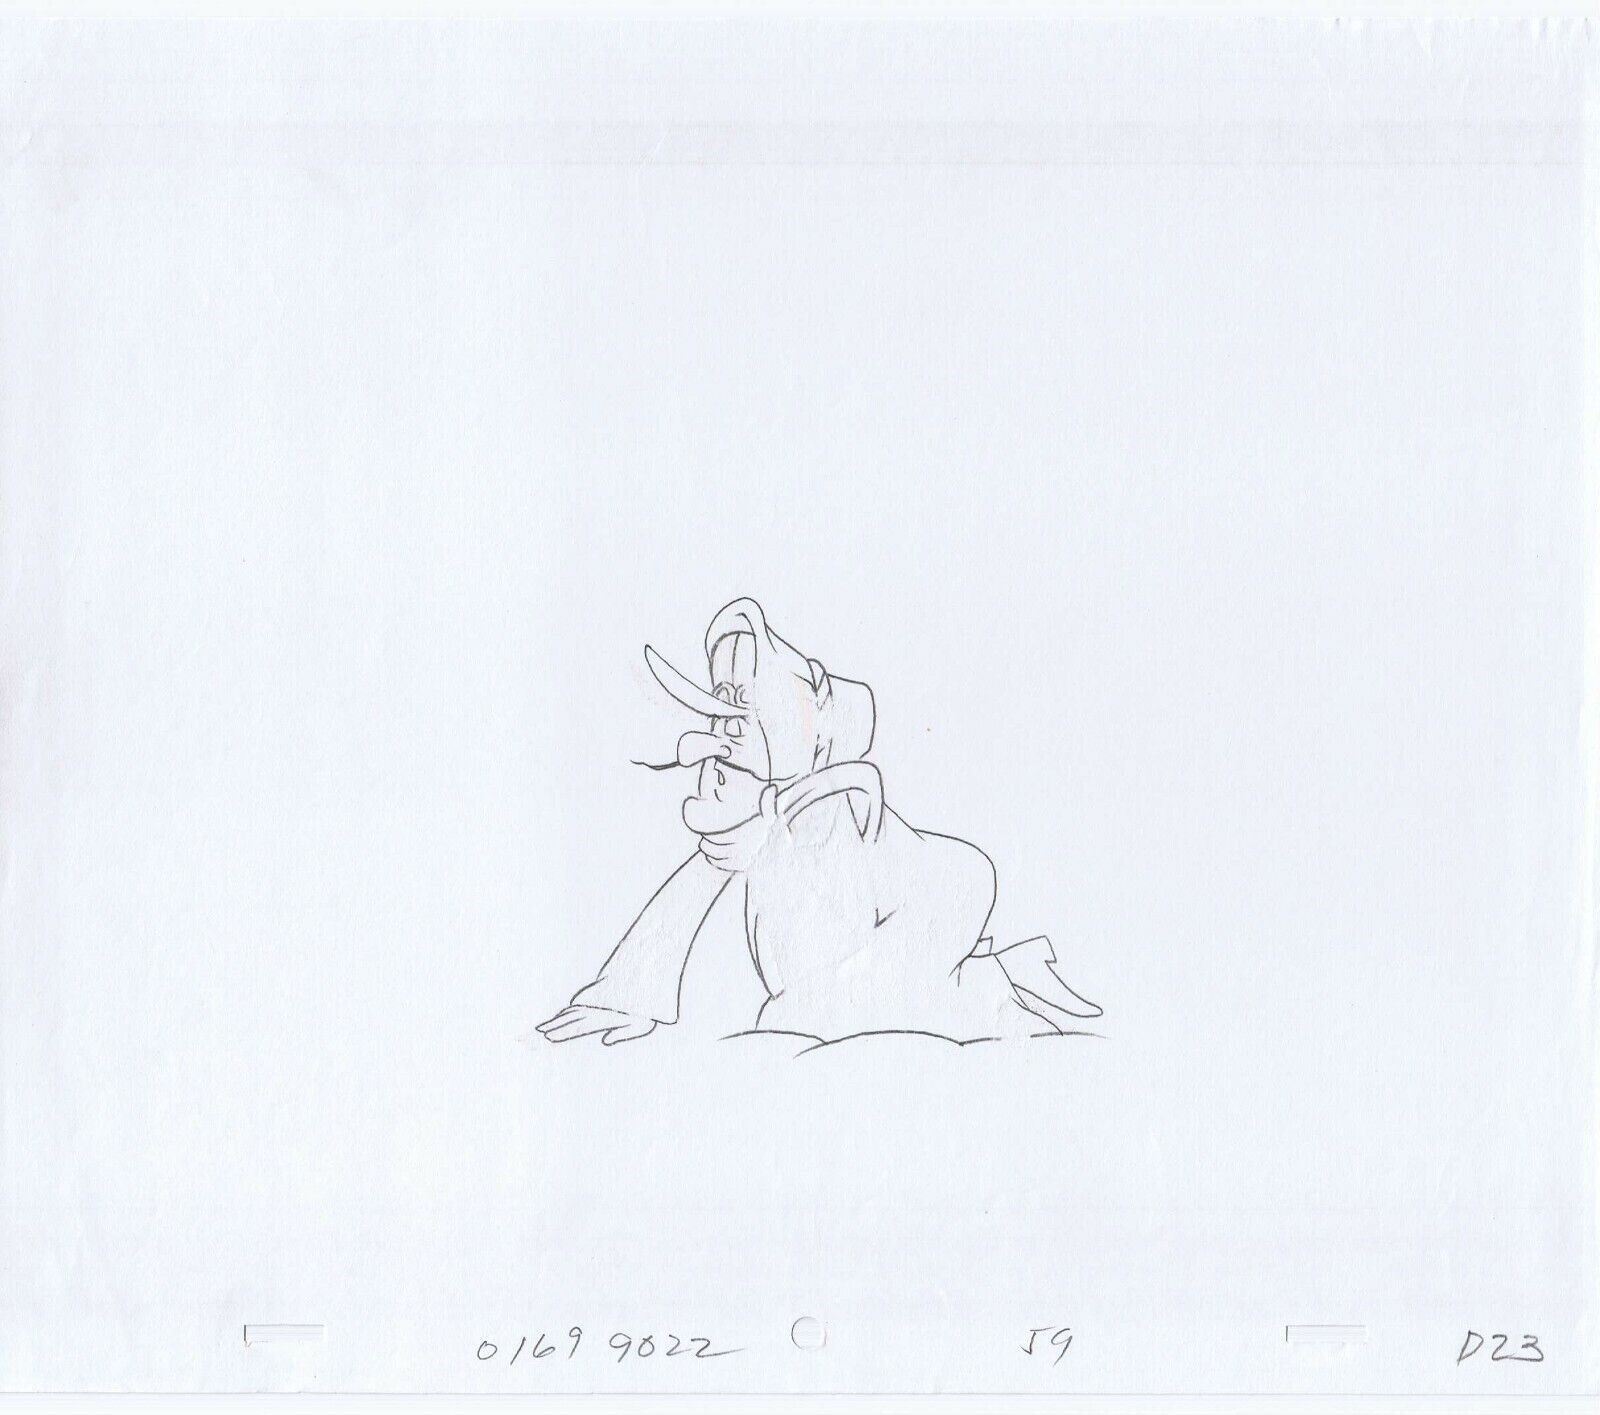 Dick Dastardly Original Art Animation Production Pencils 0169 9022 59 D23